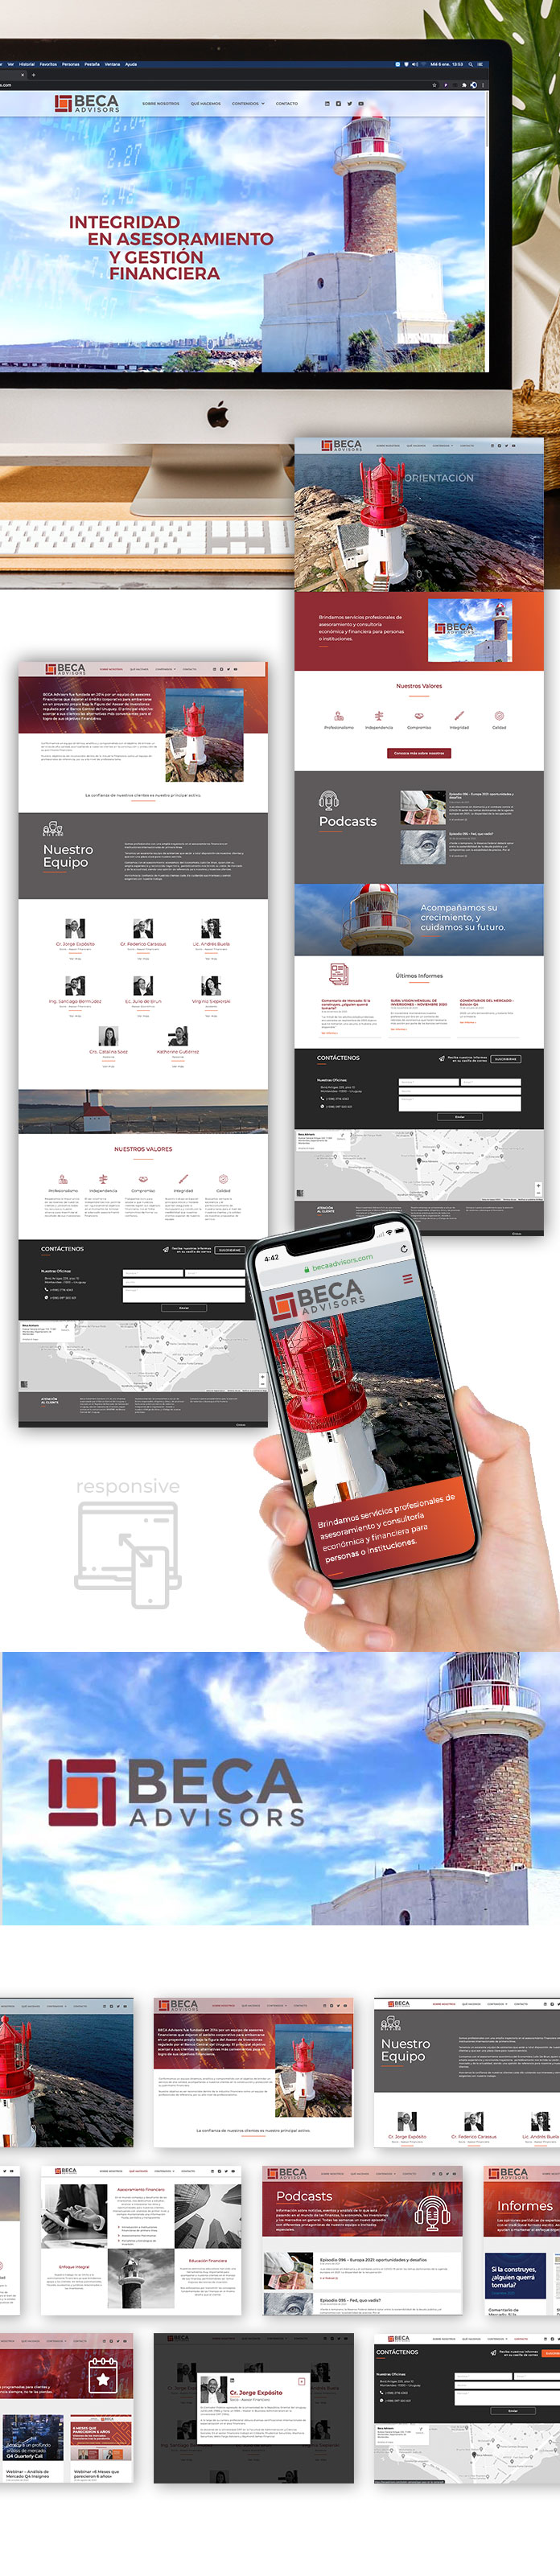 Sitio web BECA Advisors